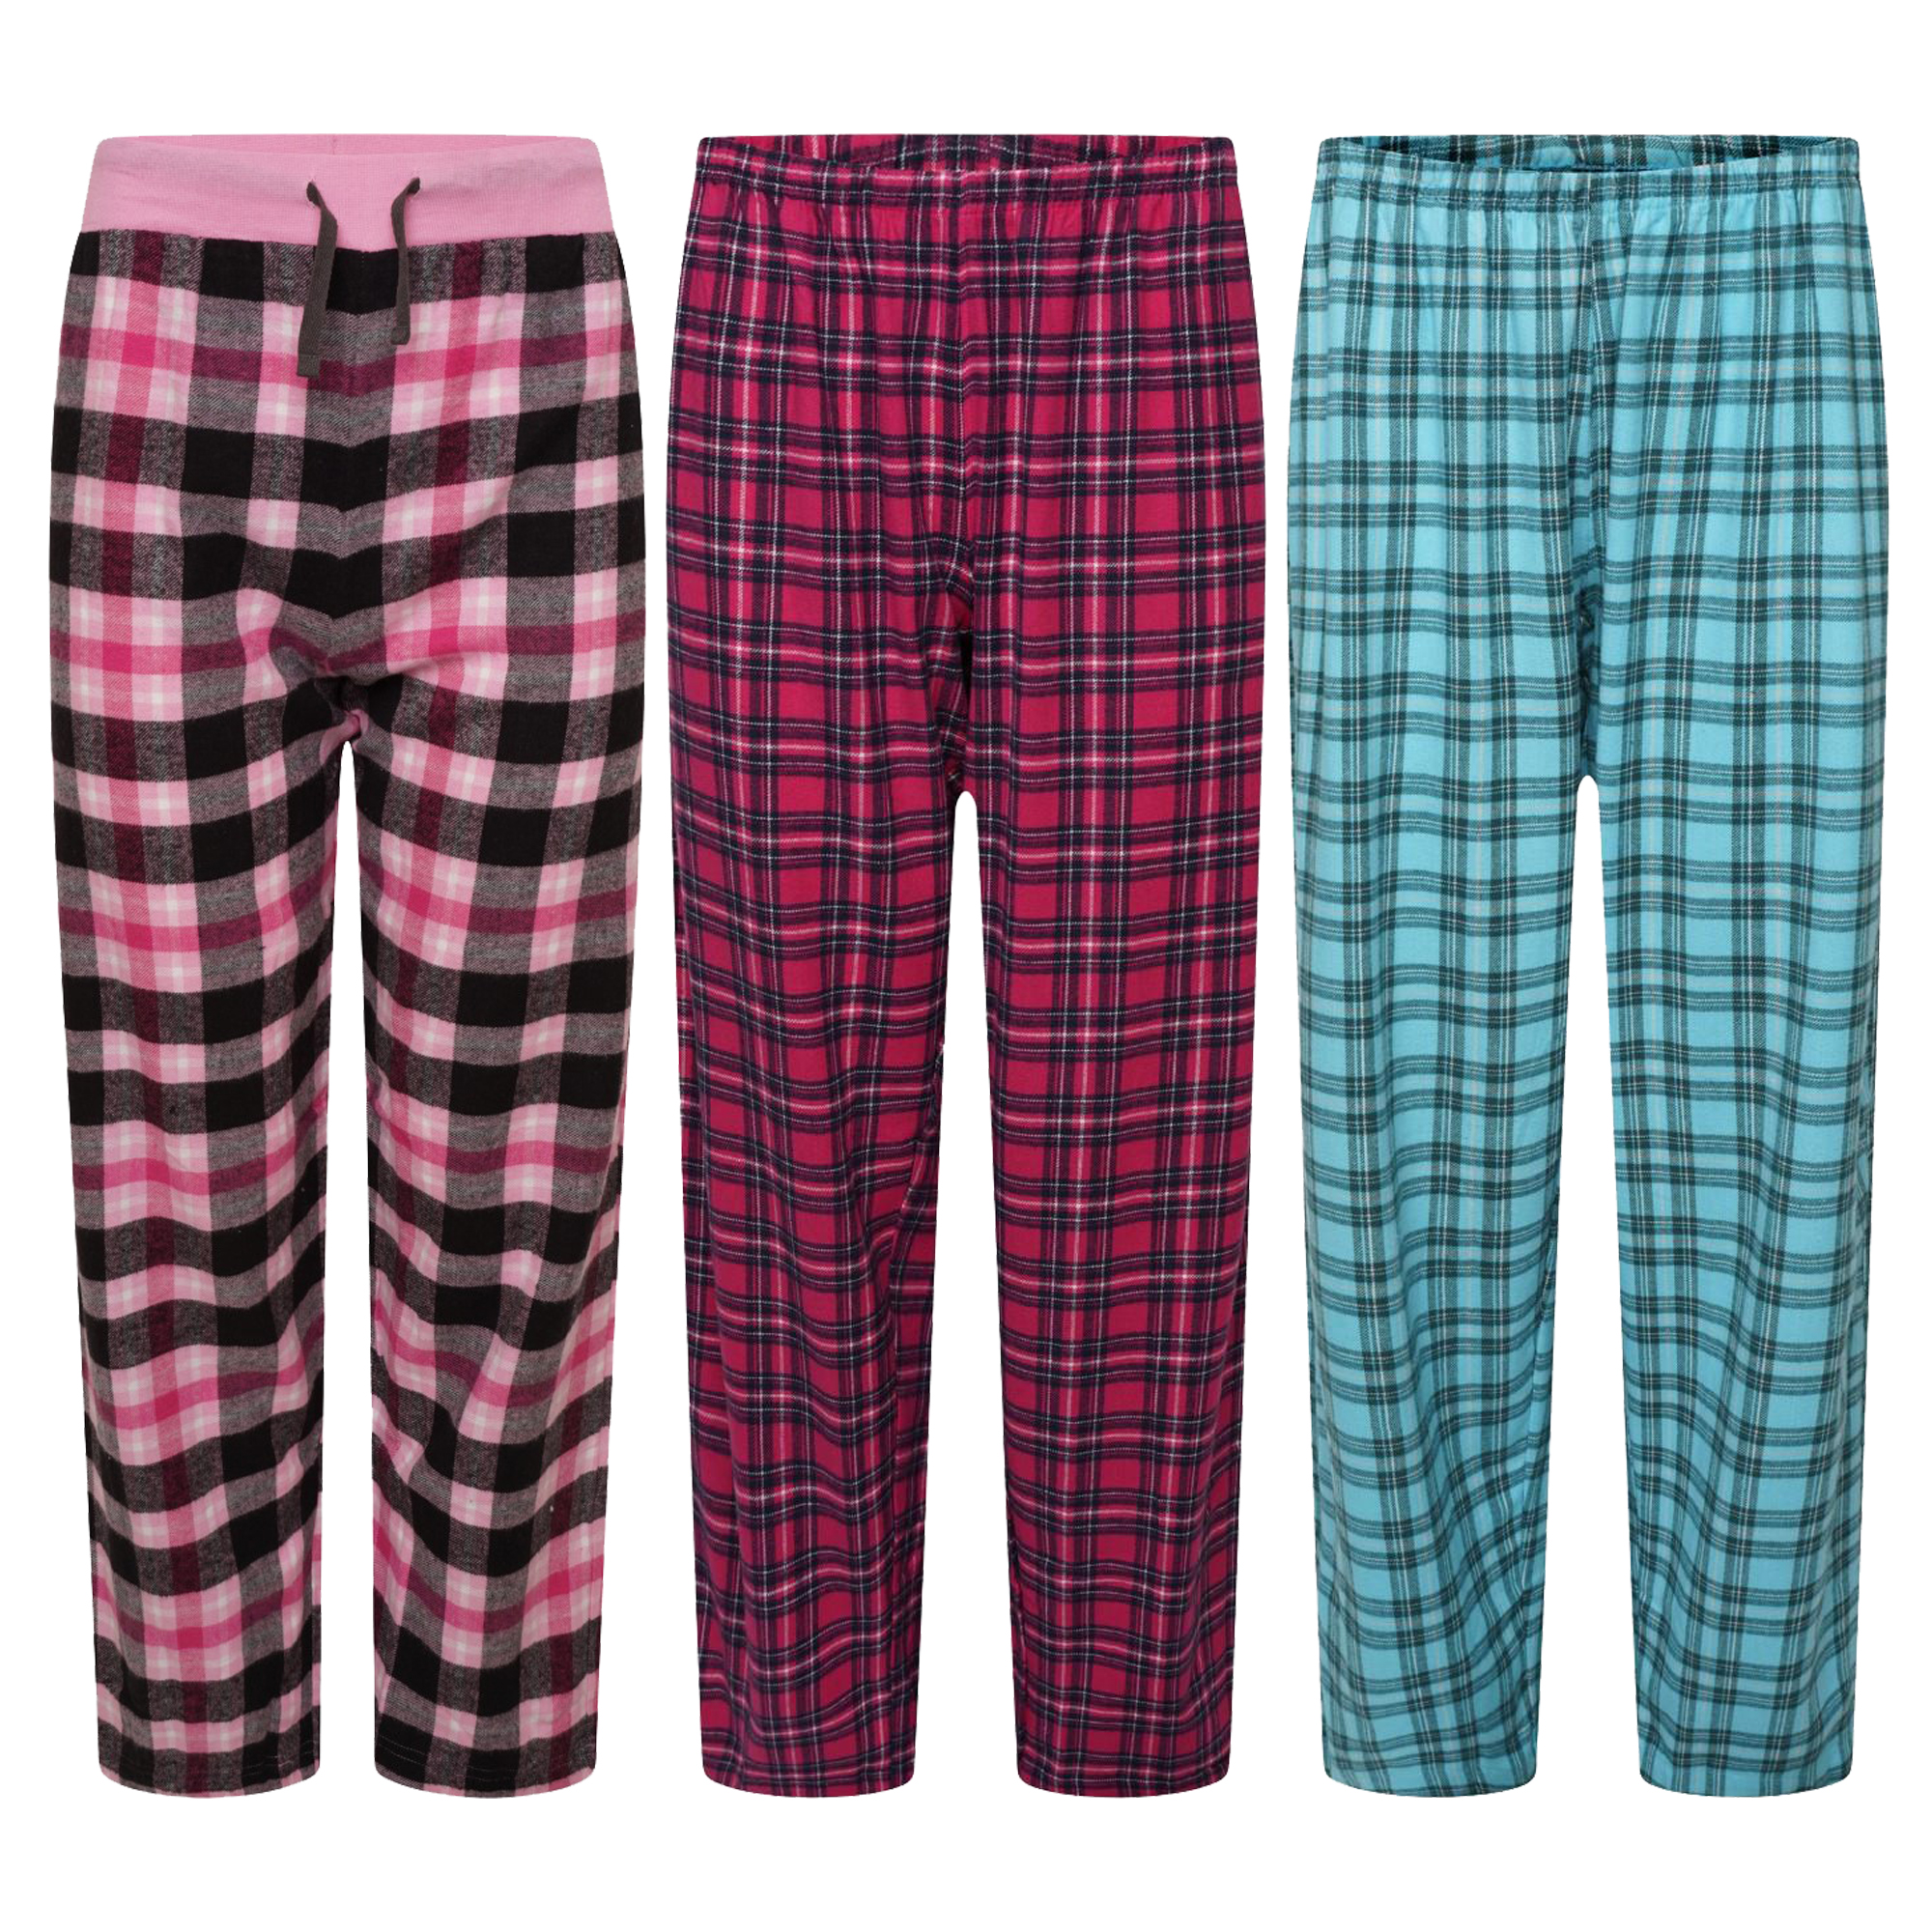 3 Pack Pajama Lounge 100% Cotton Pants Bottoms Sleepwear PJs S-6XL (Big &  Tall)